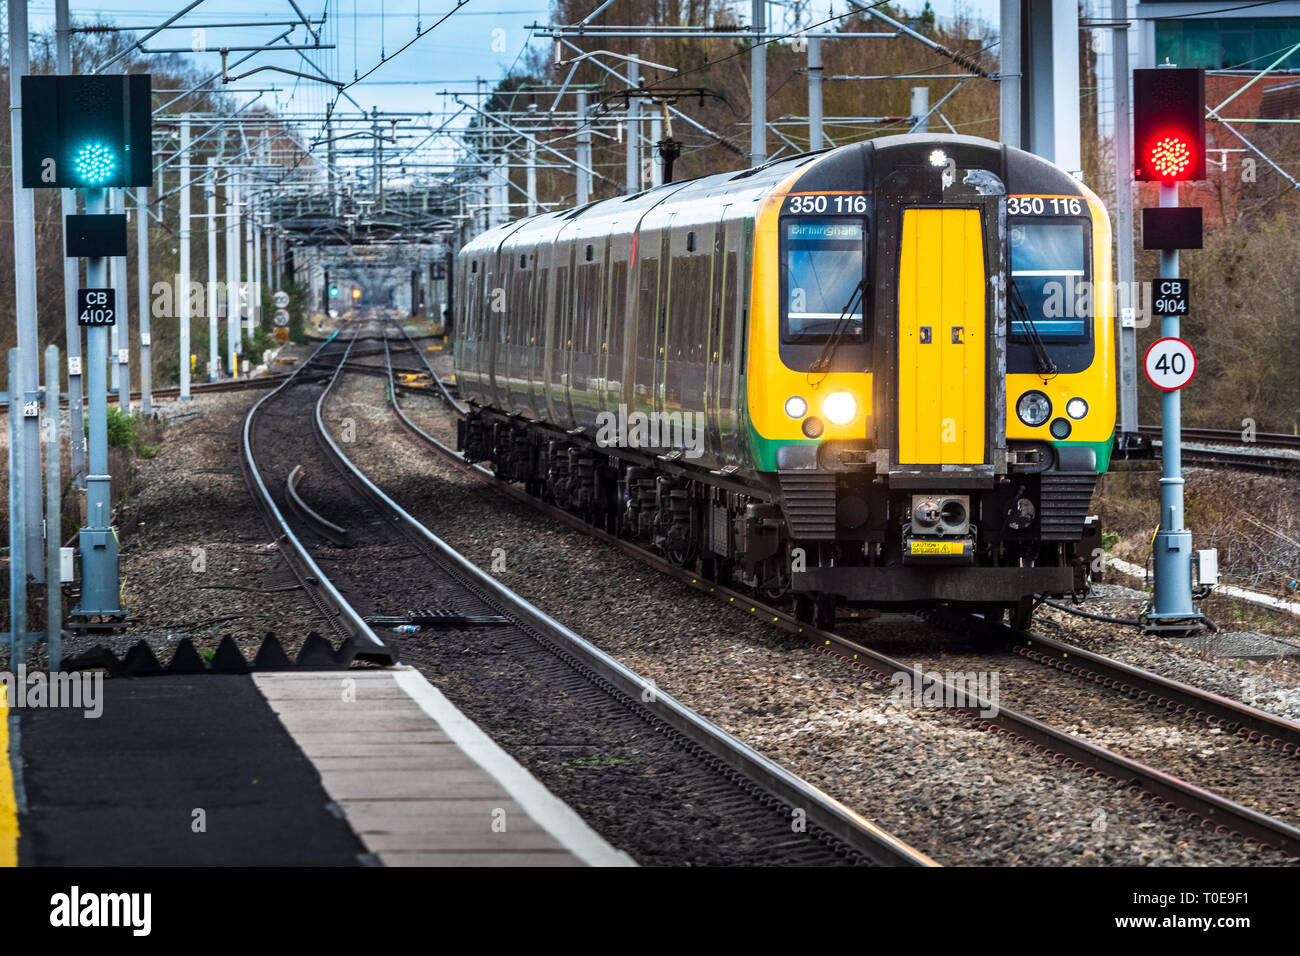 LNWR London Northwestern Railway train passing through Hampton-in-Arden station near Birmingham UK Stock Photo